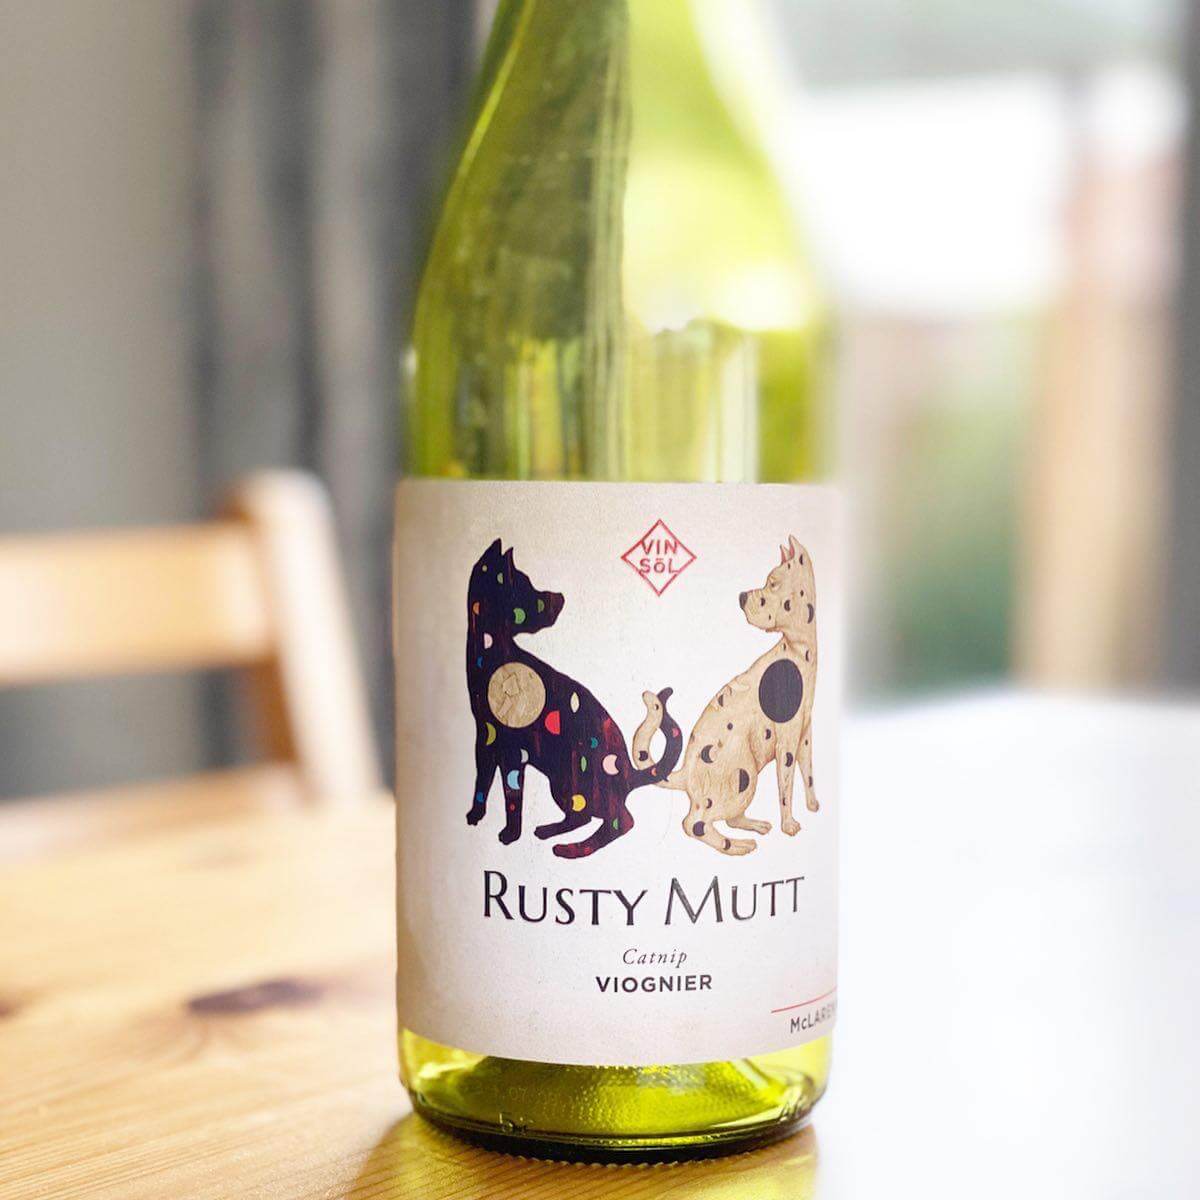 Rusty Mutt 2019 Catnip Viognier – McLaren Vale